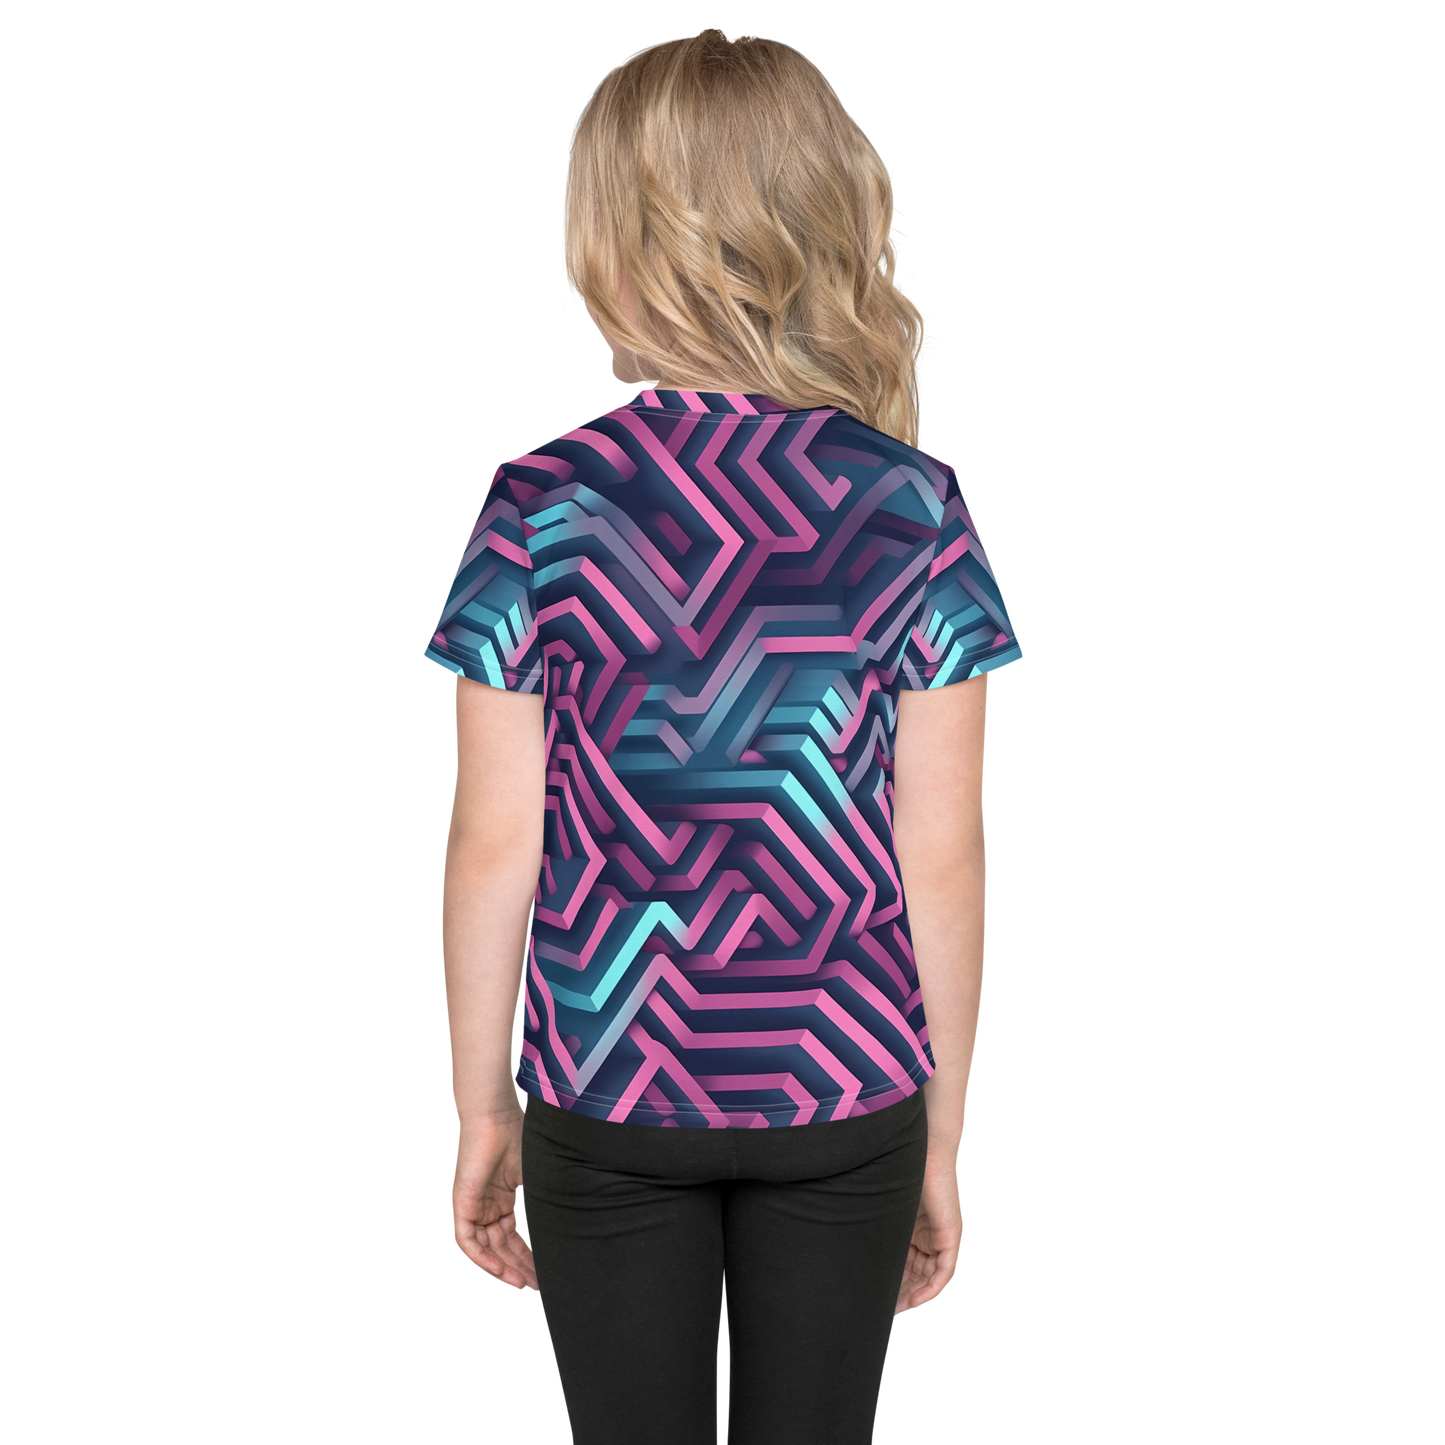 3D Maze Illusion | 3D Patterns | All-Over Print Kids Crew Neck T-Shirt - #4